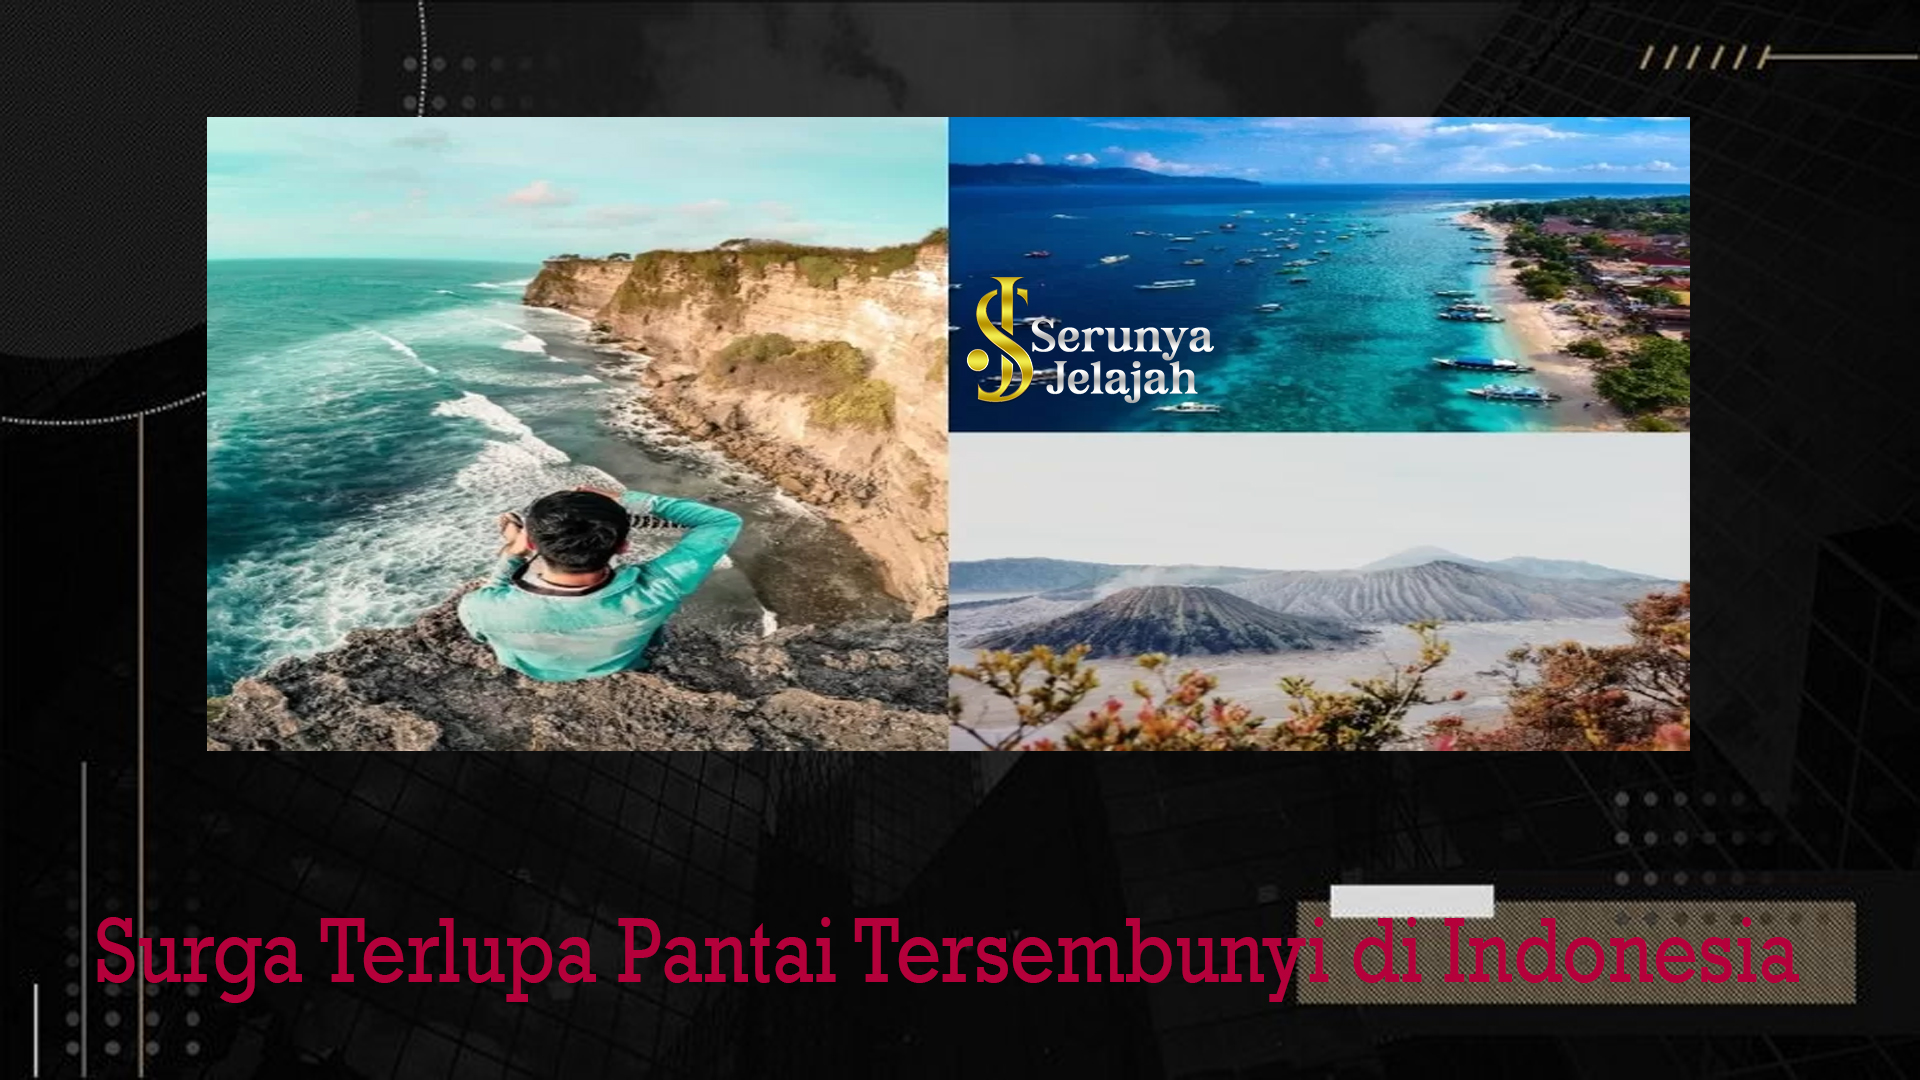 Surga Terlupa Pantai Tersembunyi di Indonesia